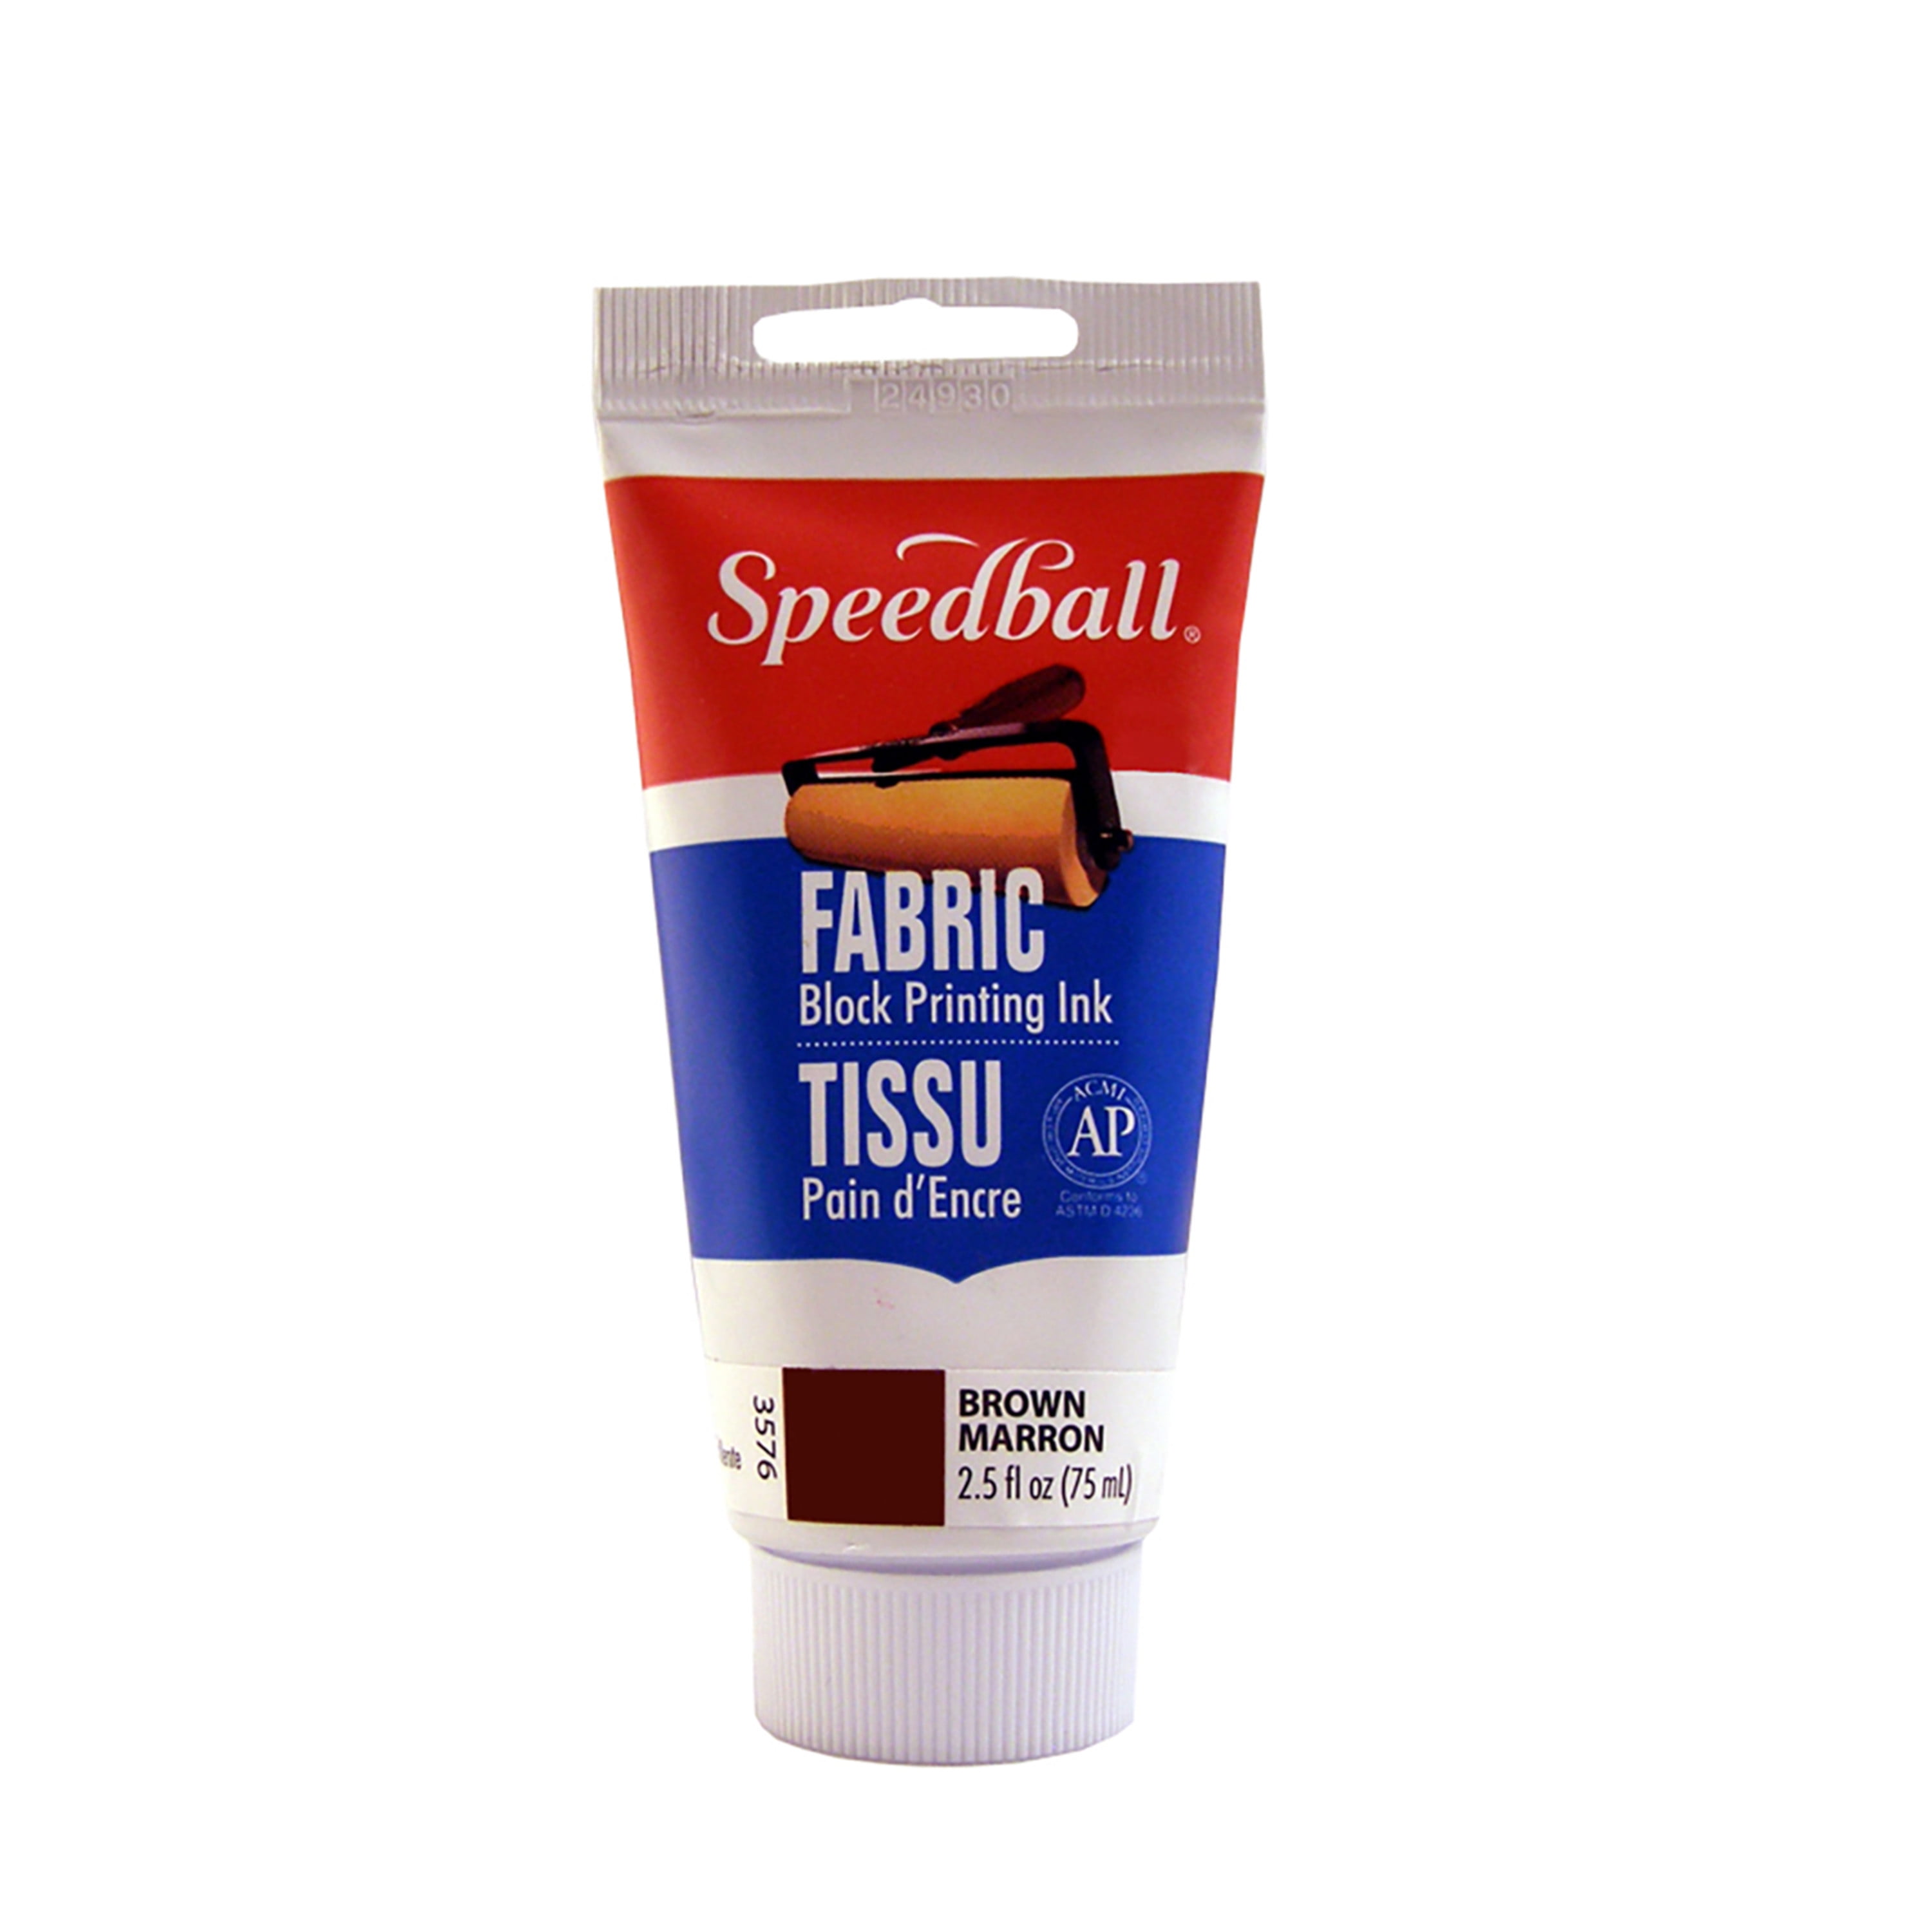 Speedball Art Essential Tools Screen Printing Kit 